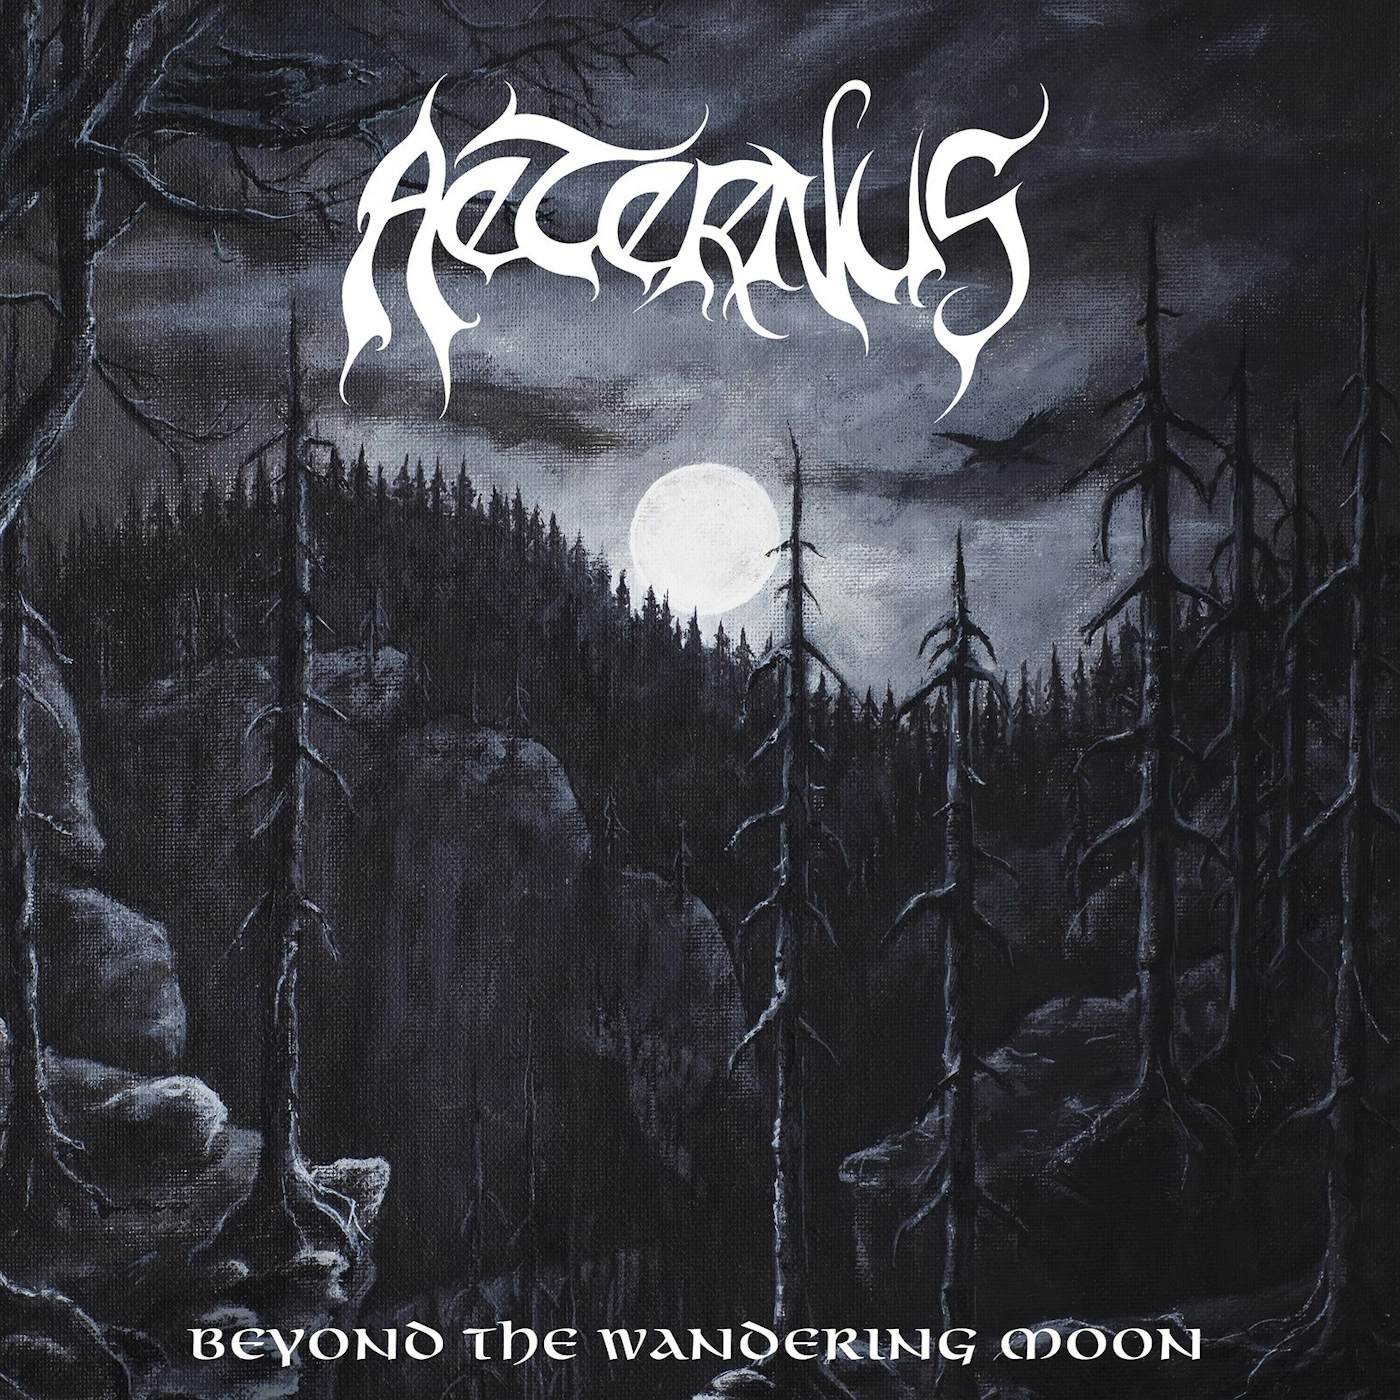 Aeternus "Beyond the wandering moon (gold vinyl)" Limited Edition 2x12"